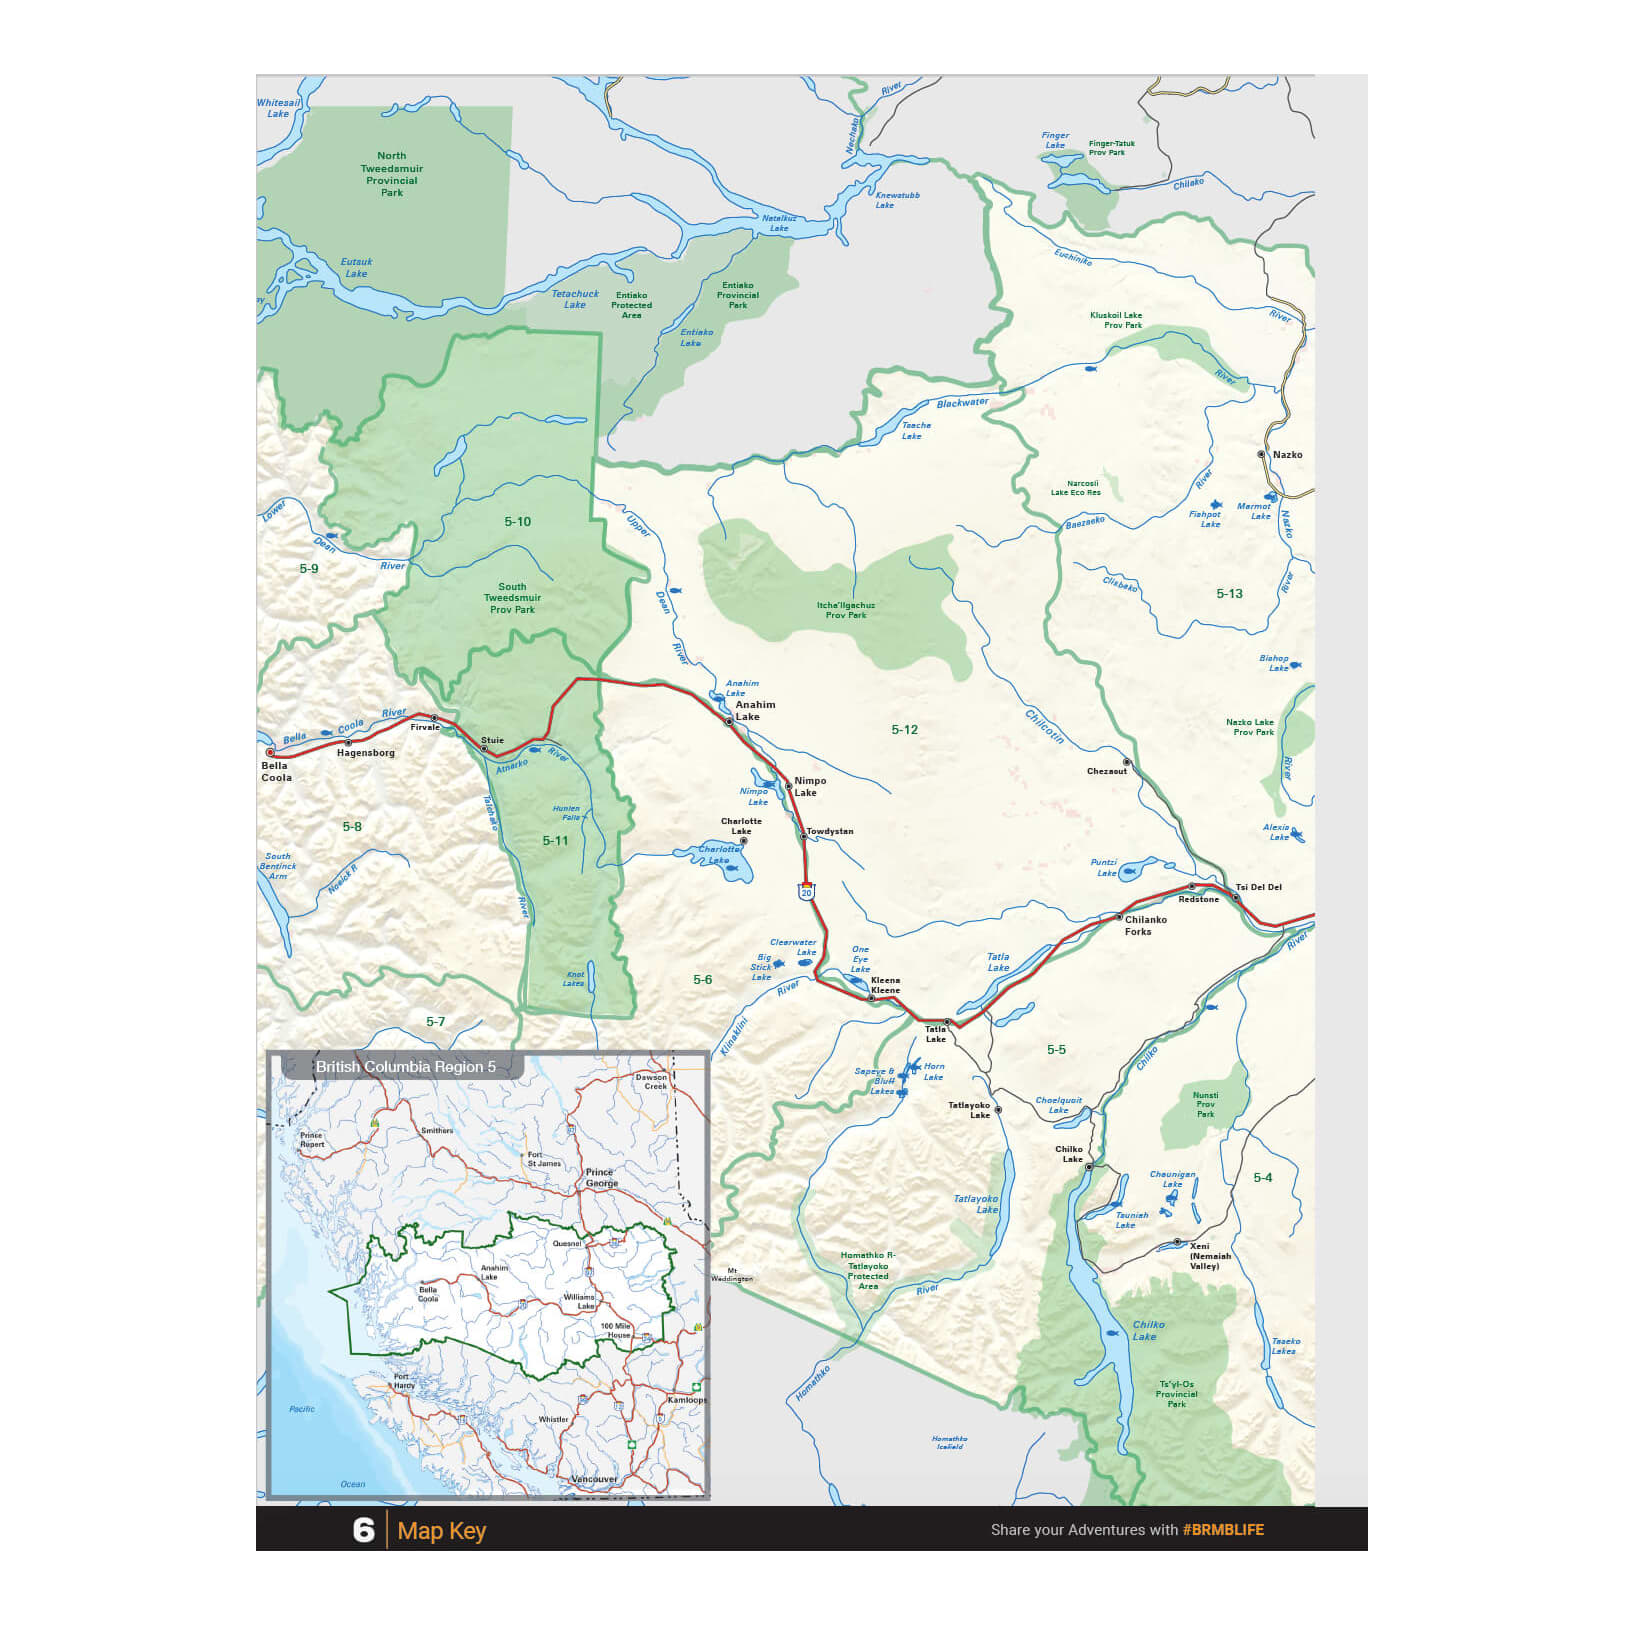 Backroad Mapbooks - Cariboo Lakes and Rivers Fishing Mapbook